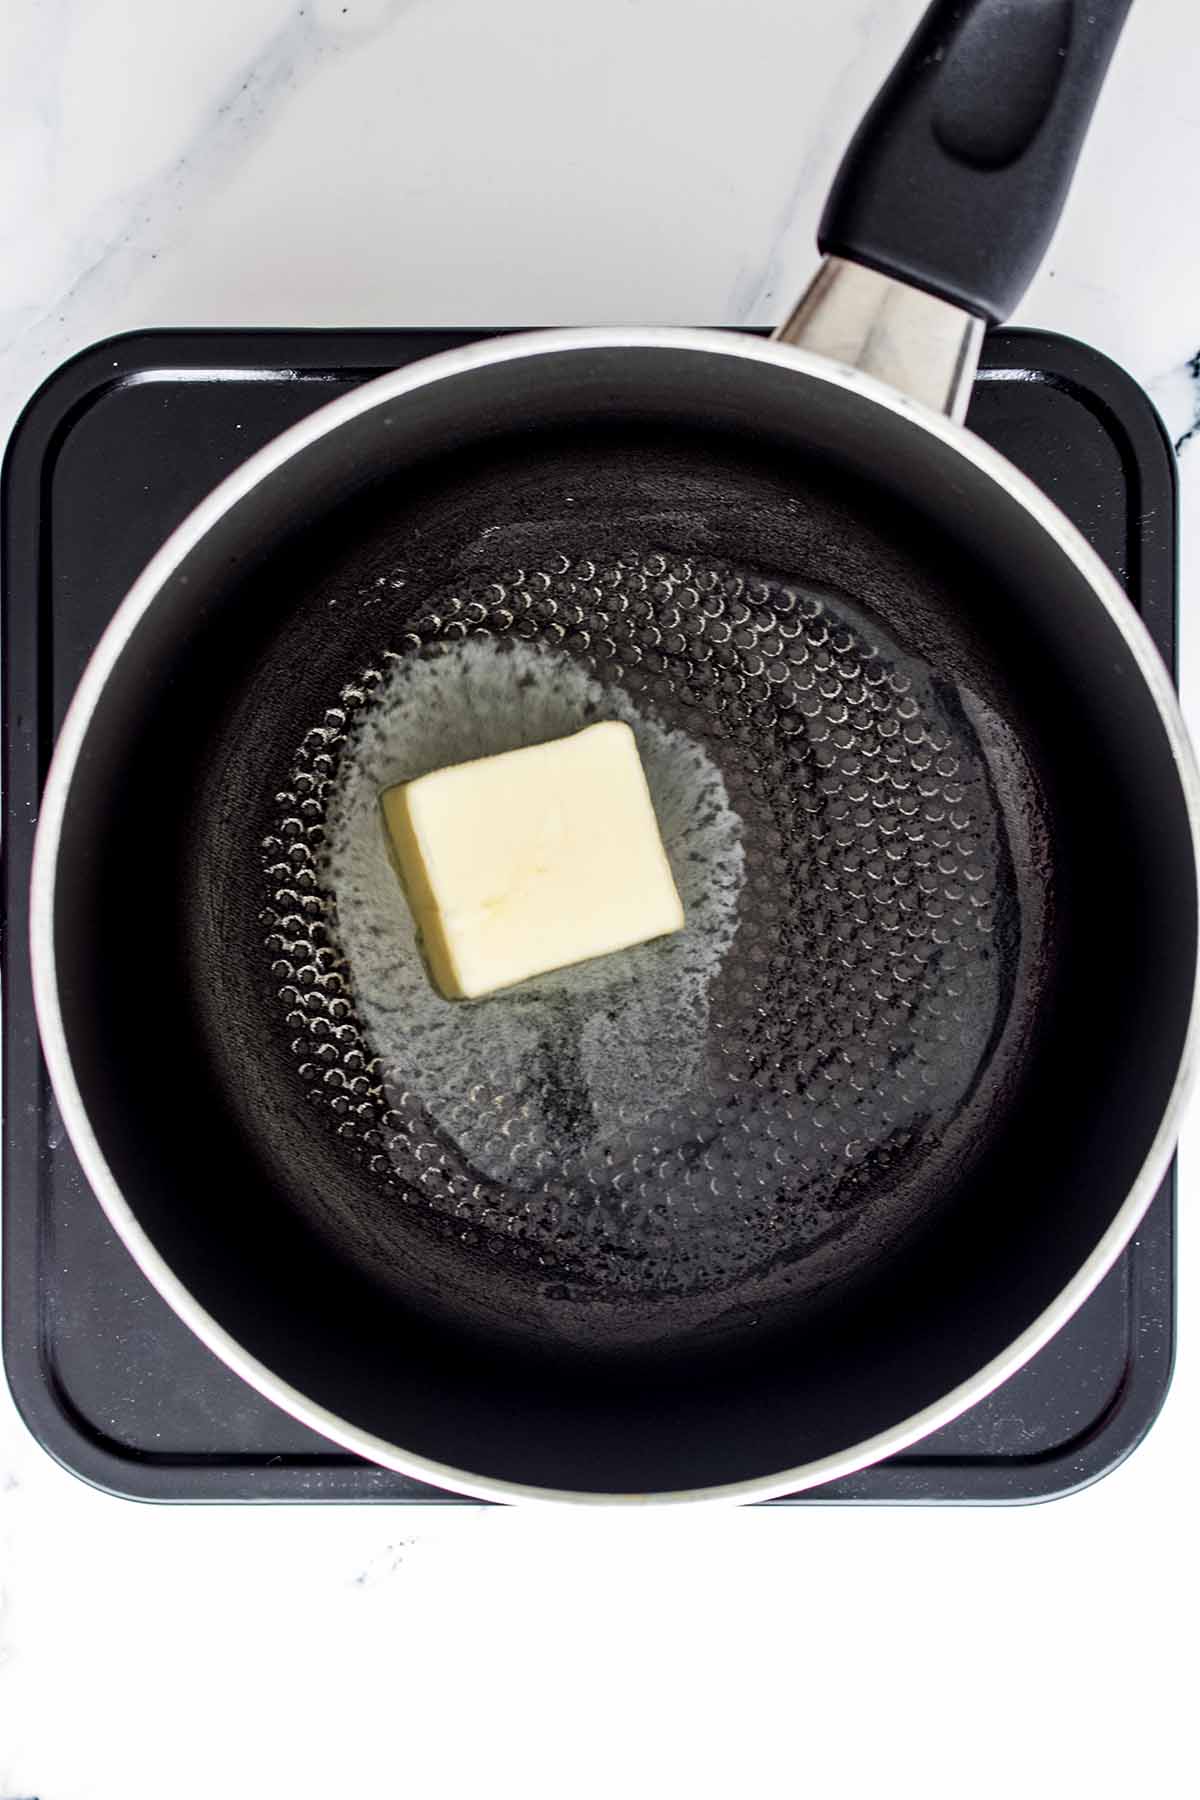 Pat of butter melting in a saucepan